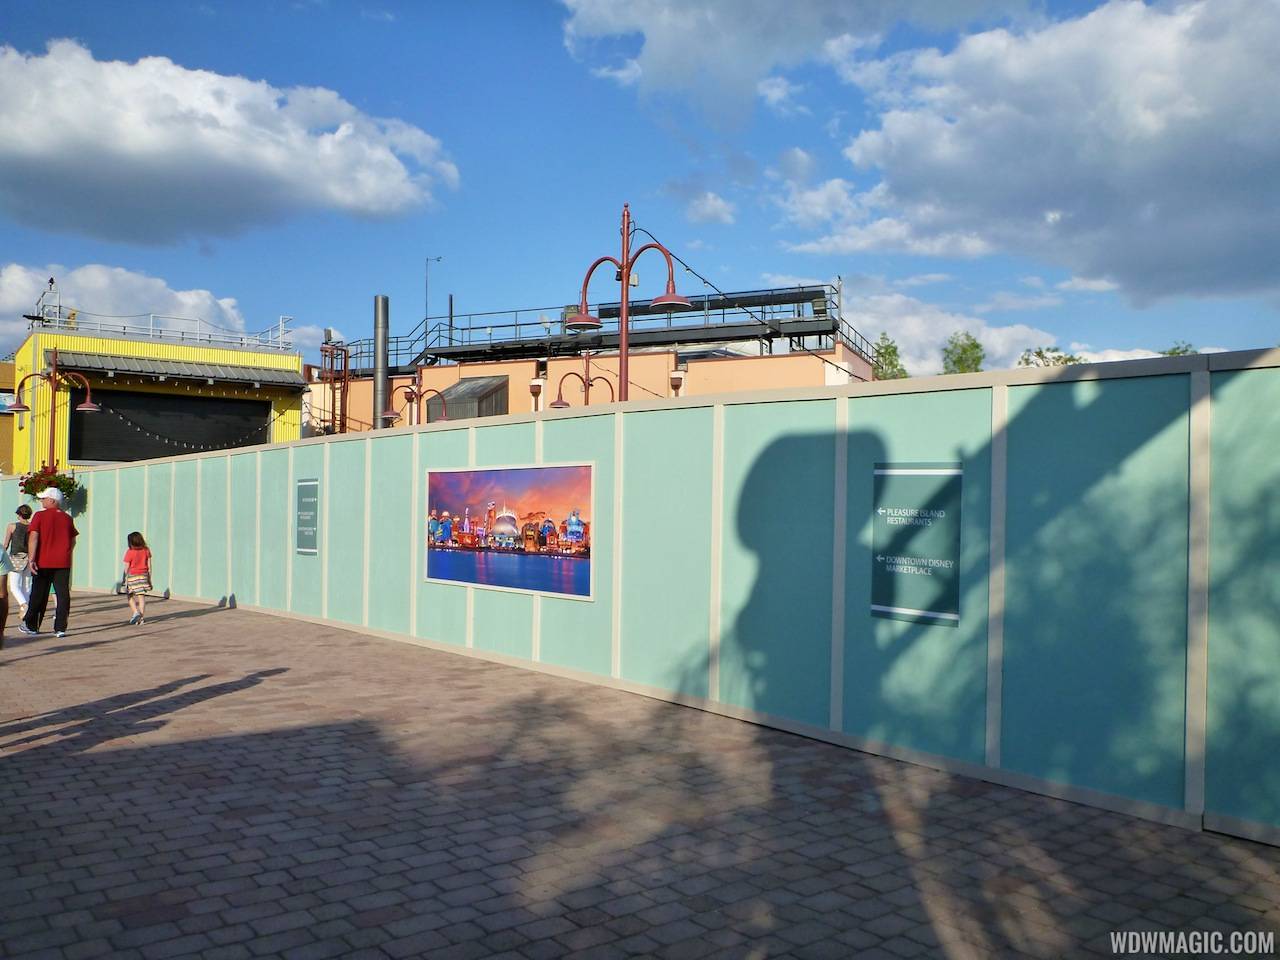 Construction walls up in former Pleasure Island area